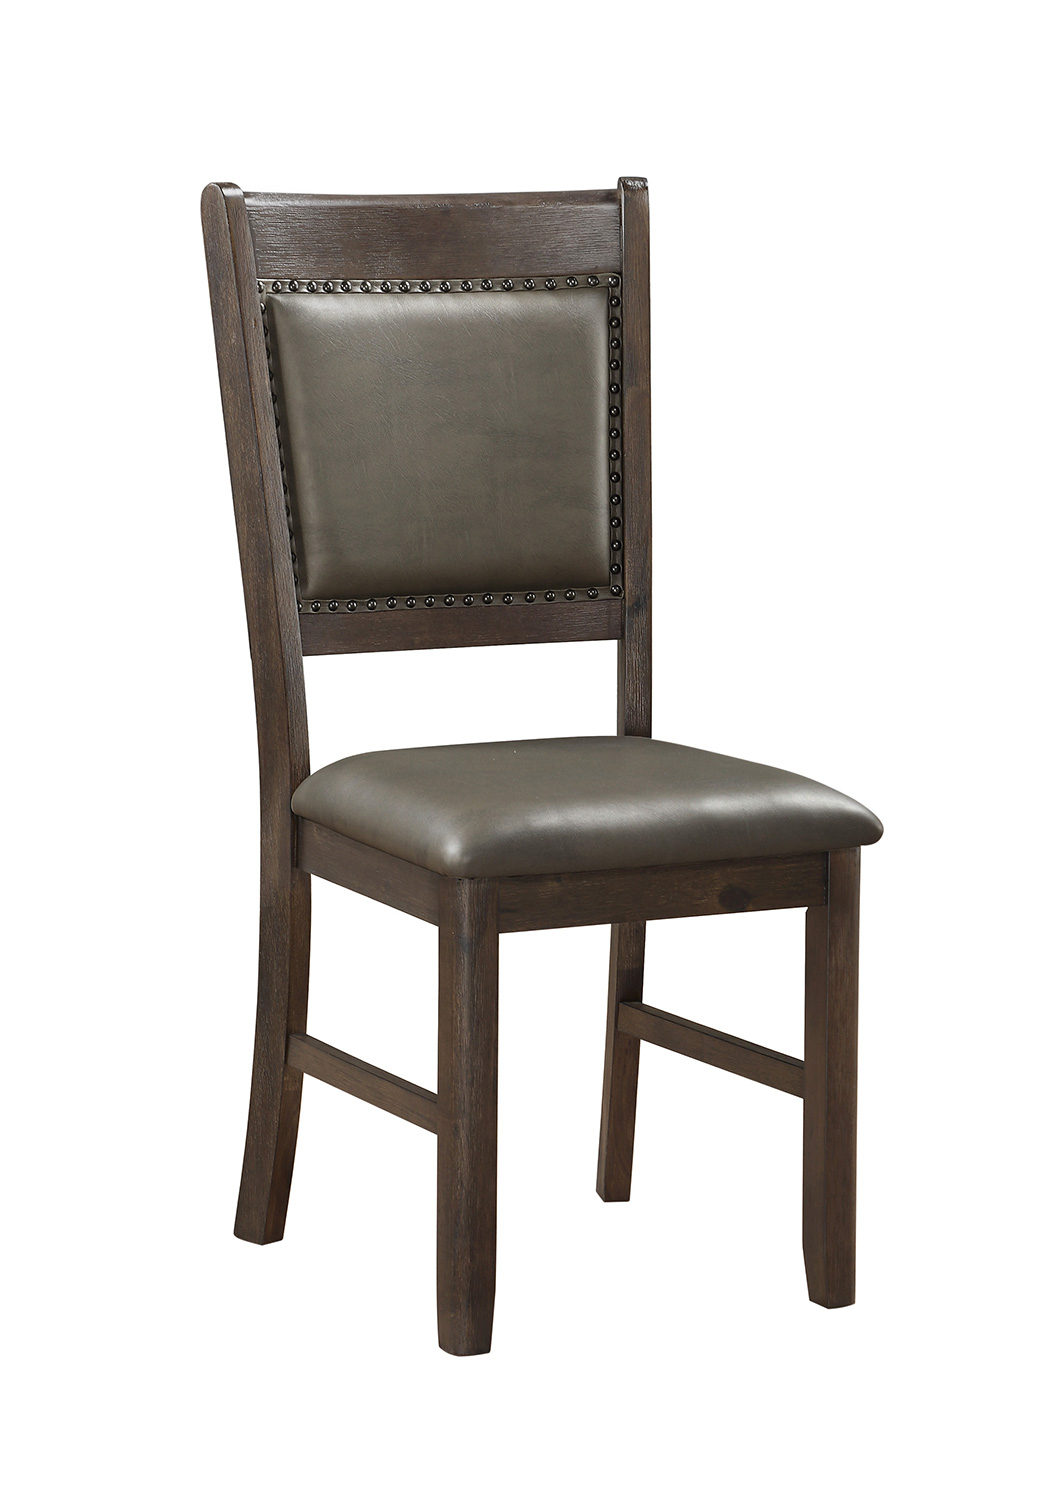 Homelegance Brim Side Chair - Brown Cherry